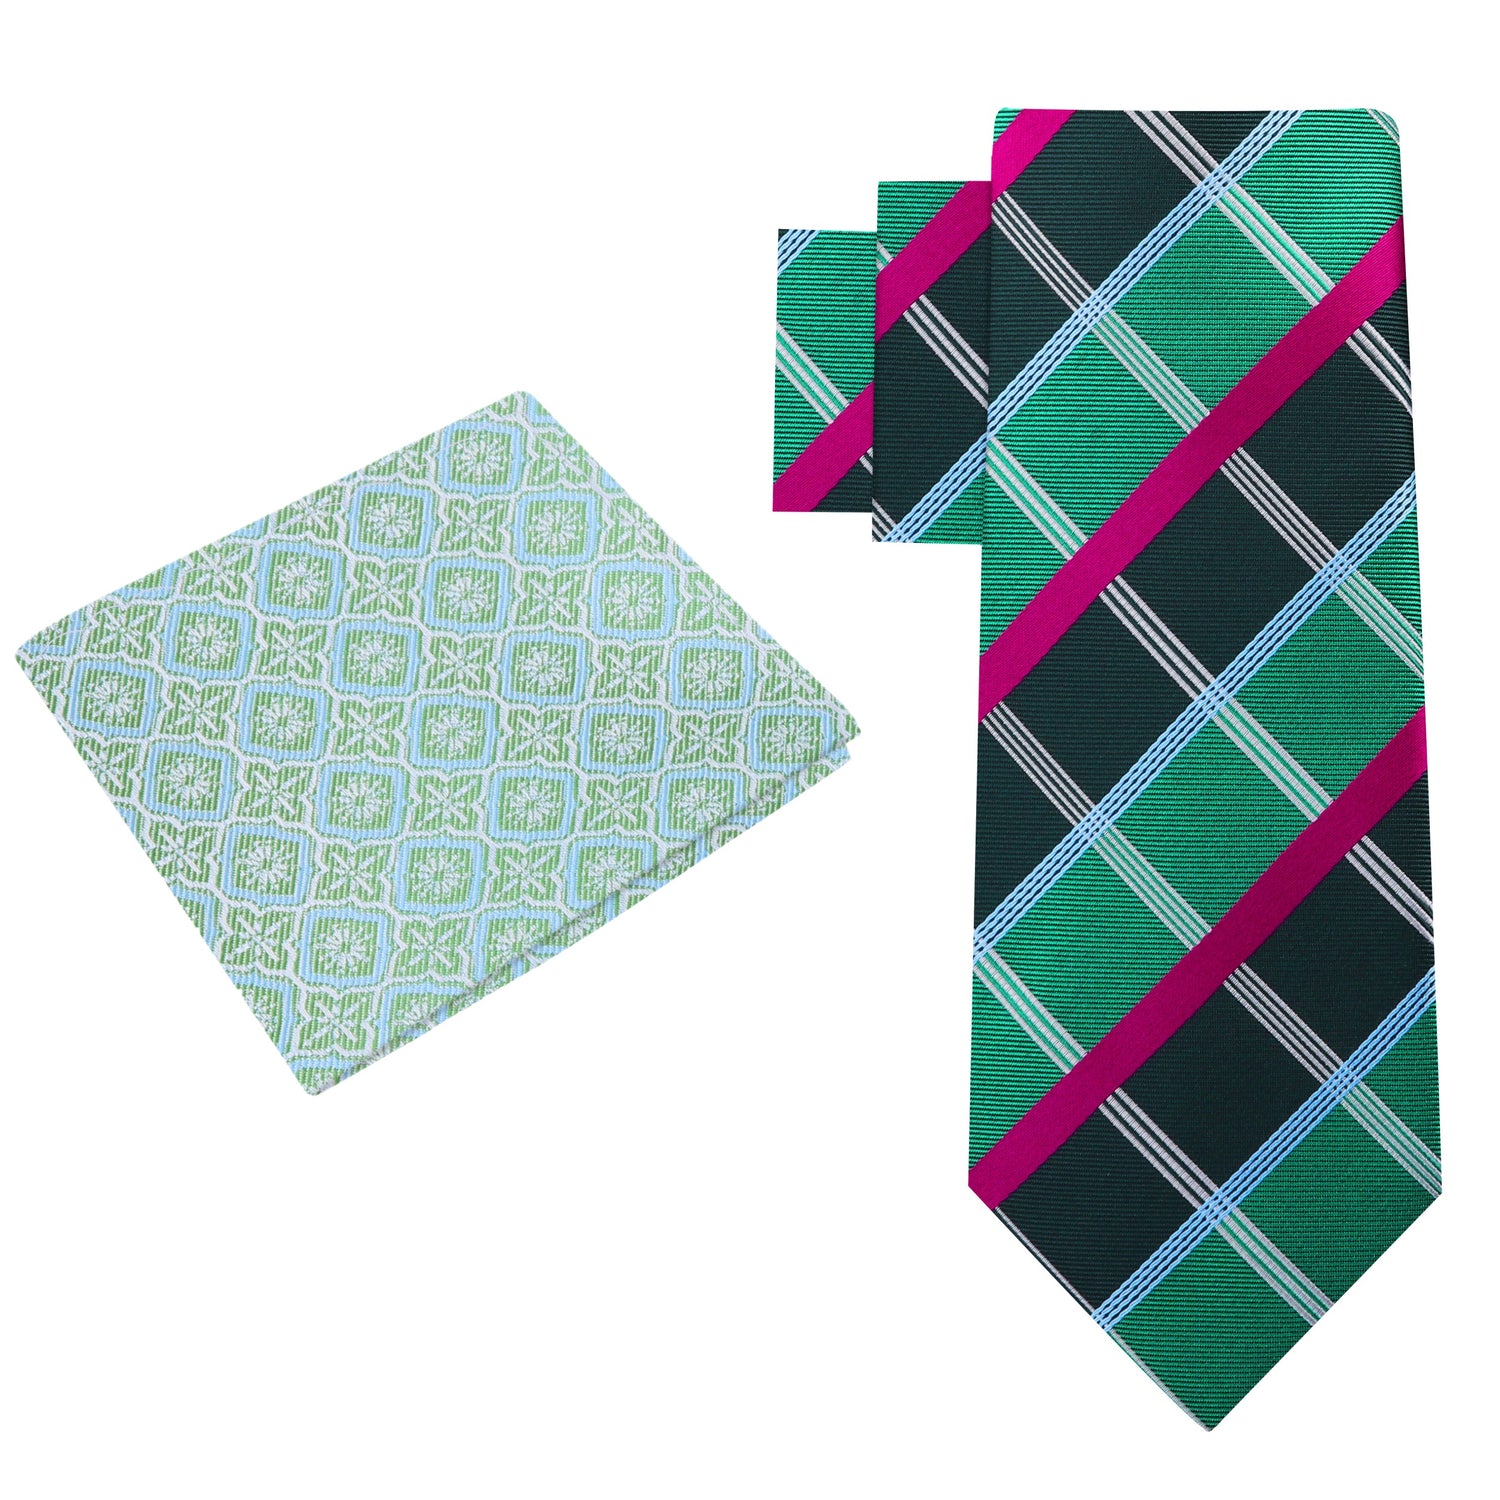 Alt View: Green, Magenta Plaid Necktie and Green, Blue Geometric Square